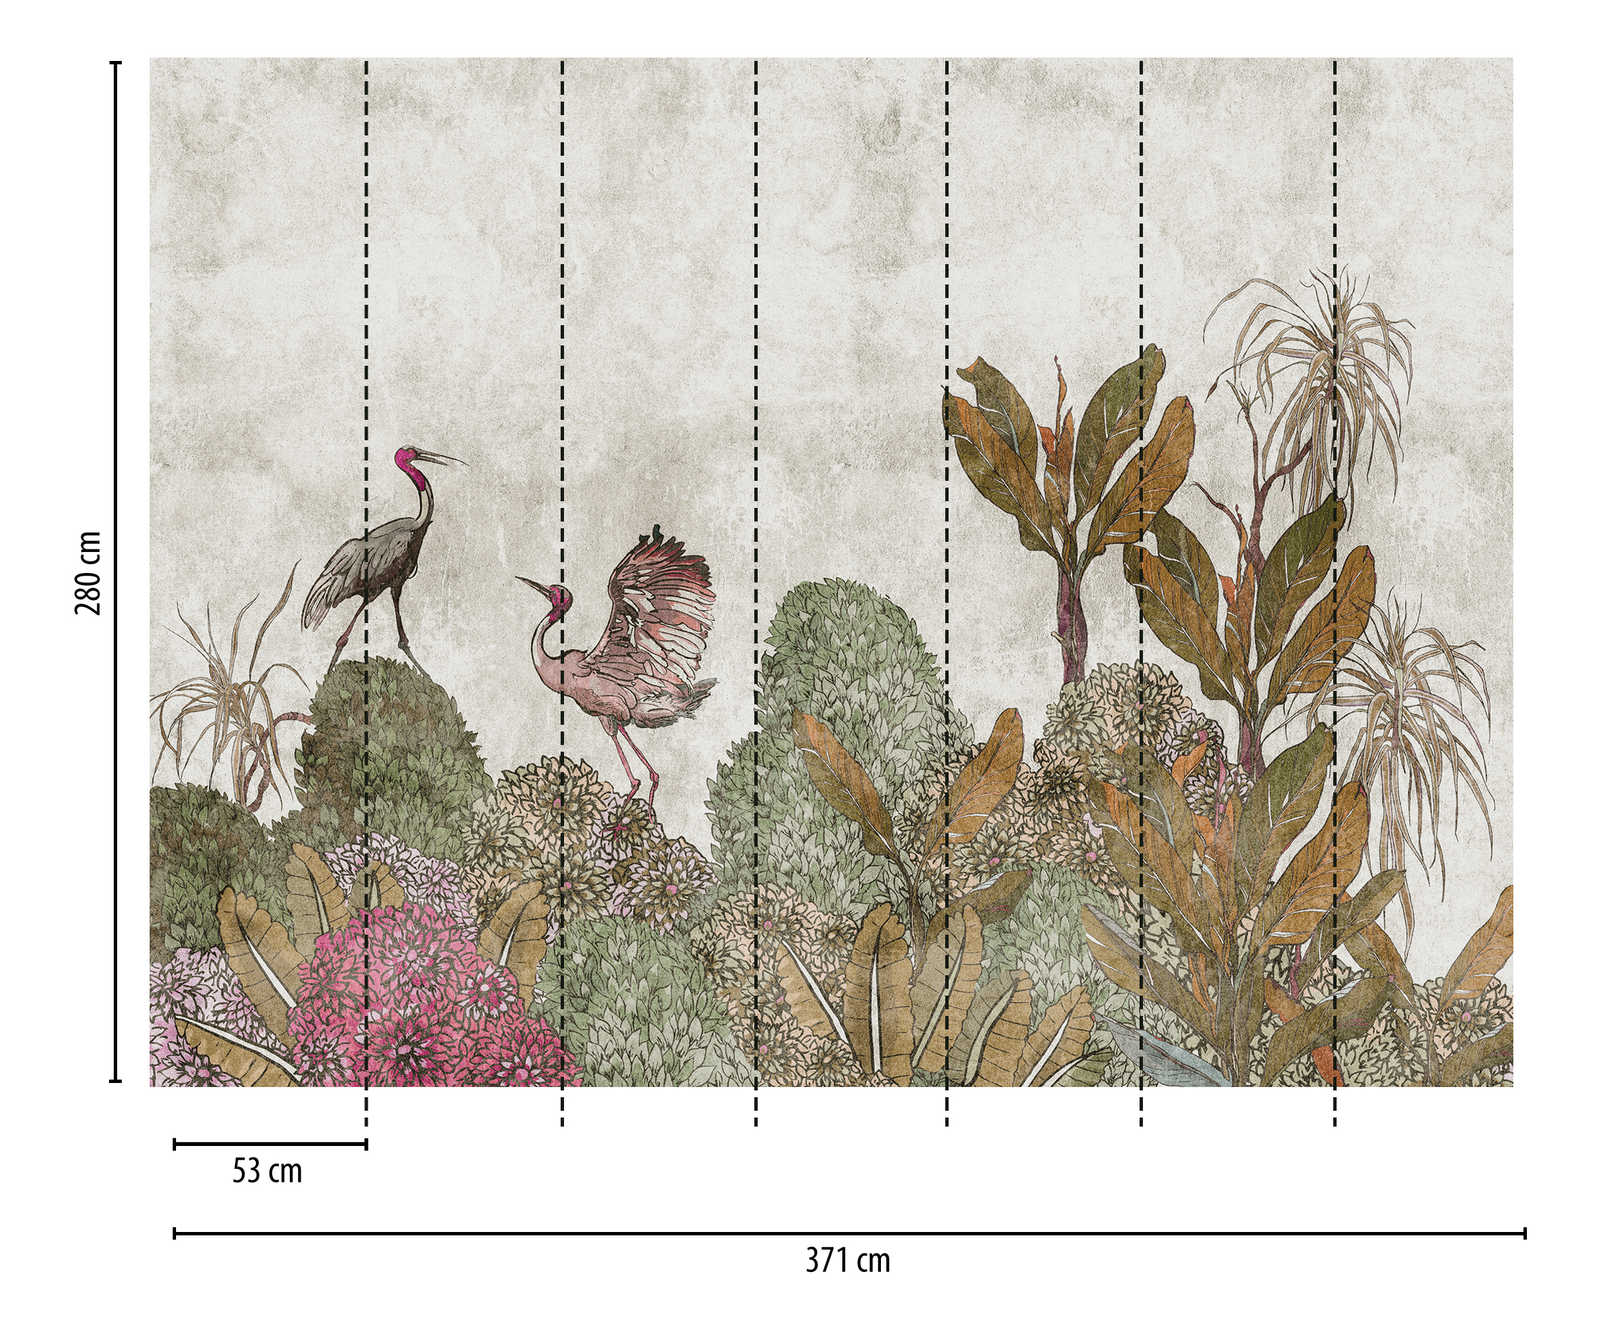             Wallpaper novelty | motif wallpaper tropical plants & cranes in used look
        